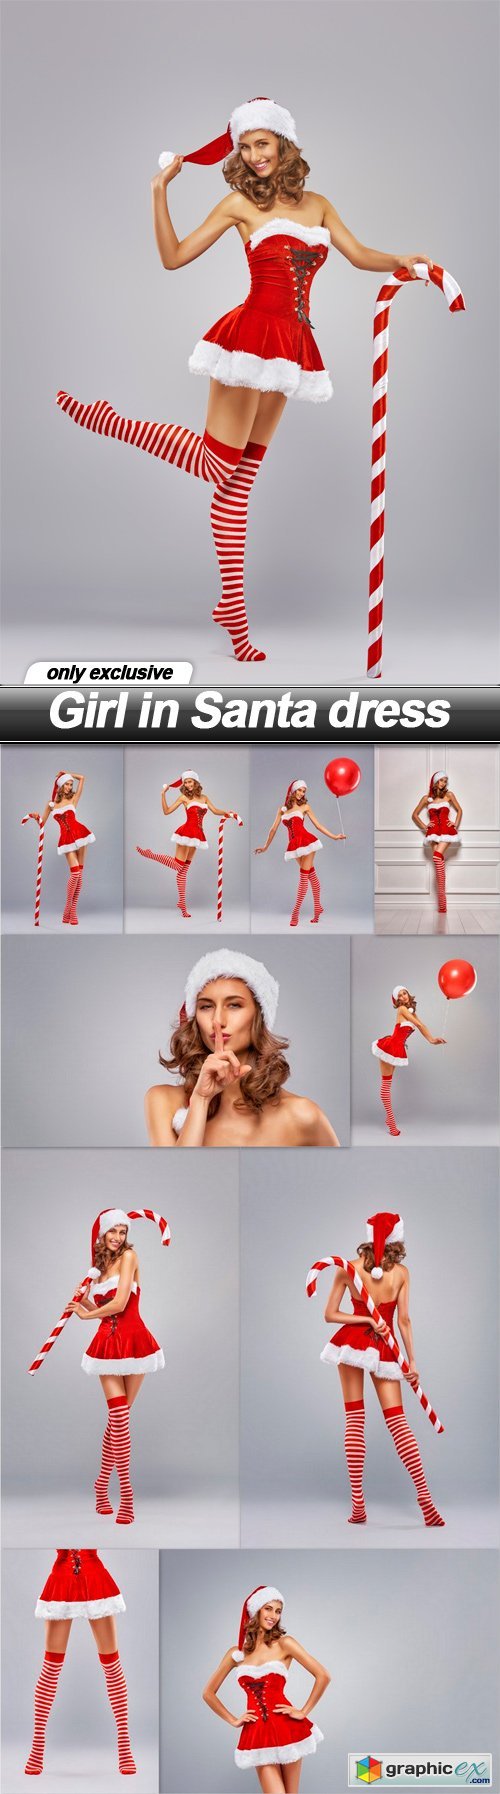 Girl in Santa dress - 10 UHQ JPEG